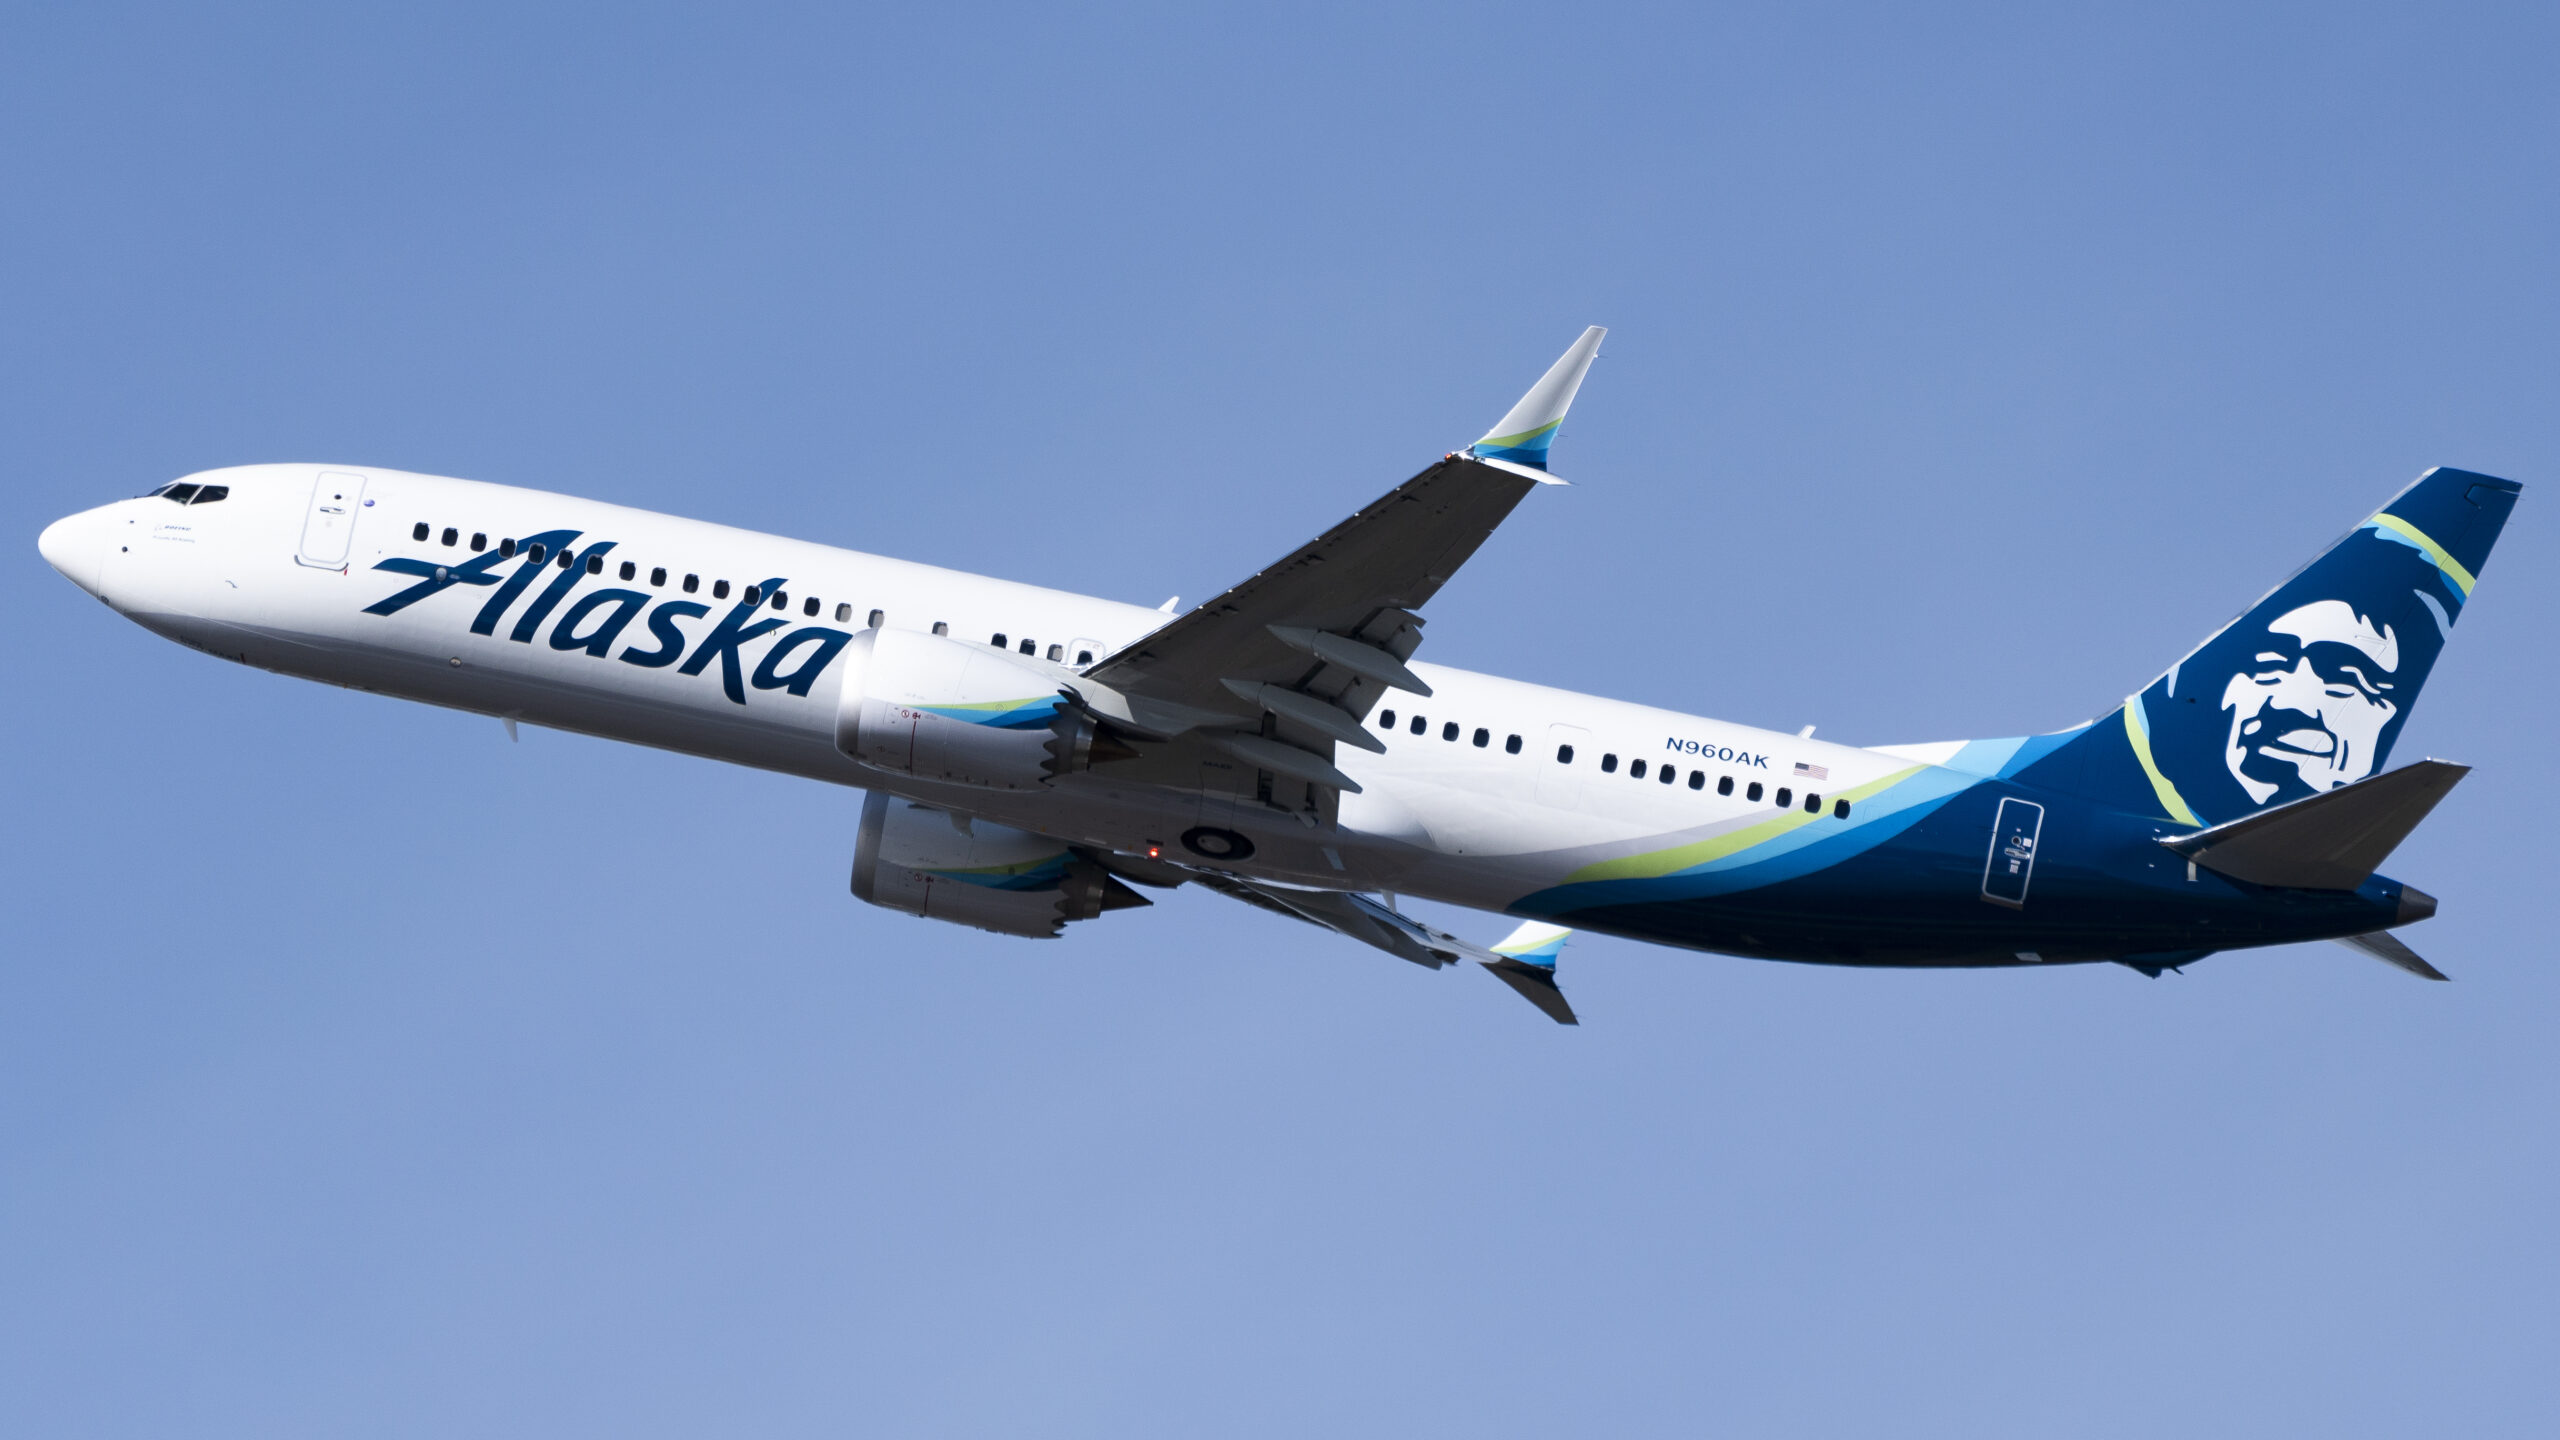 Boeing mechanics 'improperly' reinstalled Alaska Airlines door plug: insider